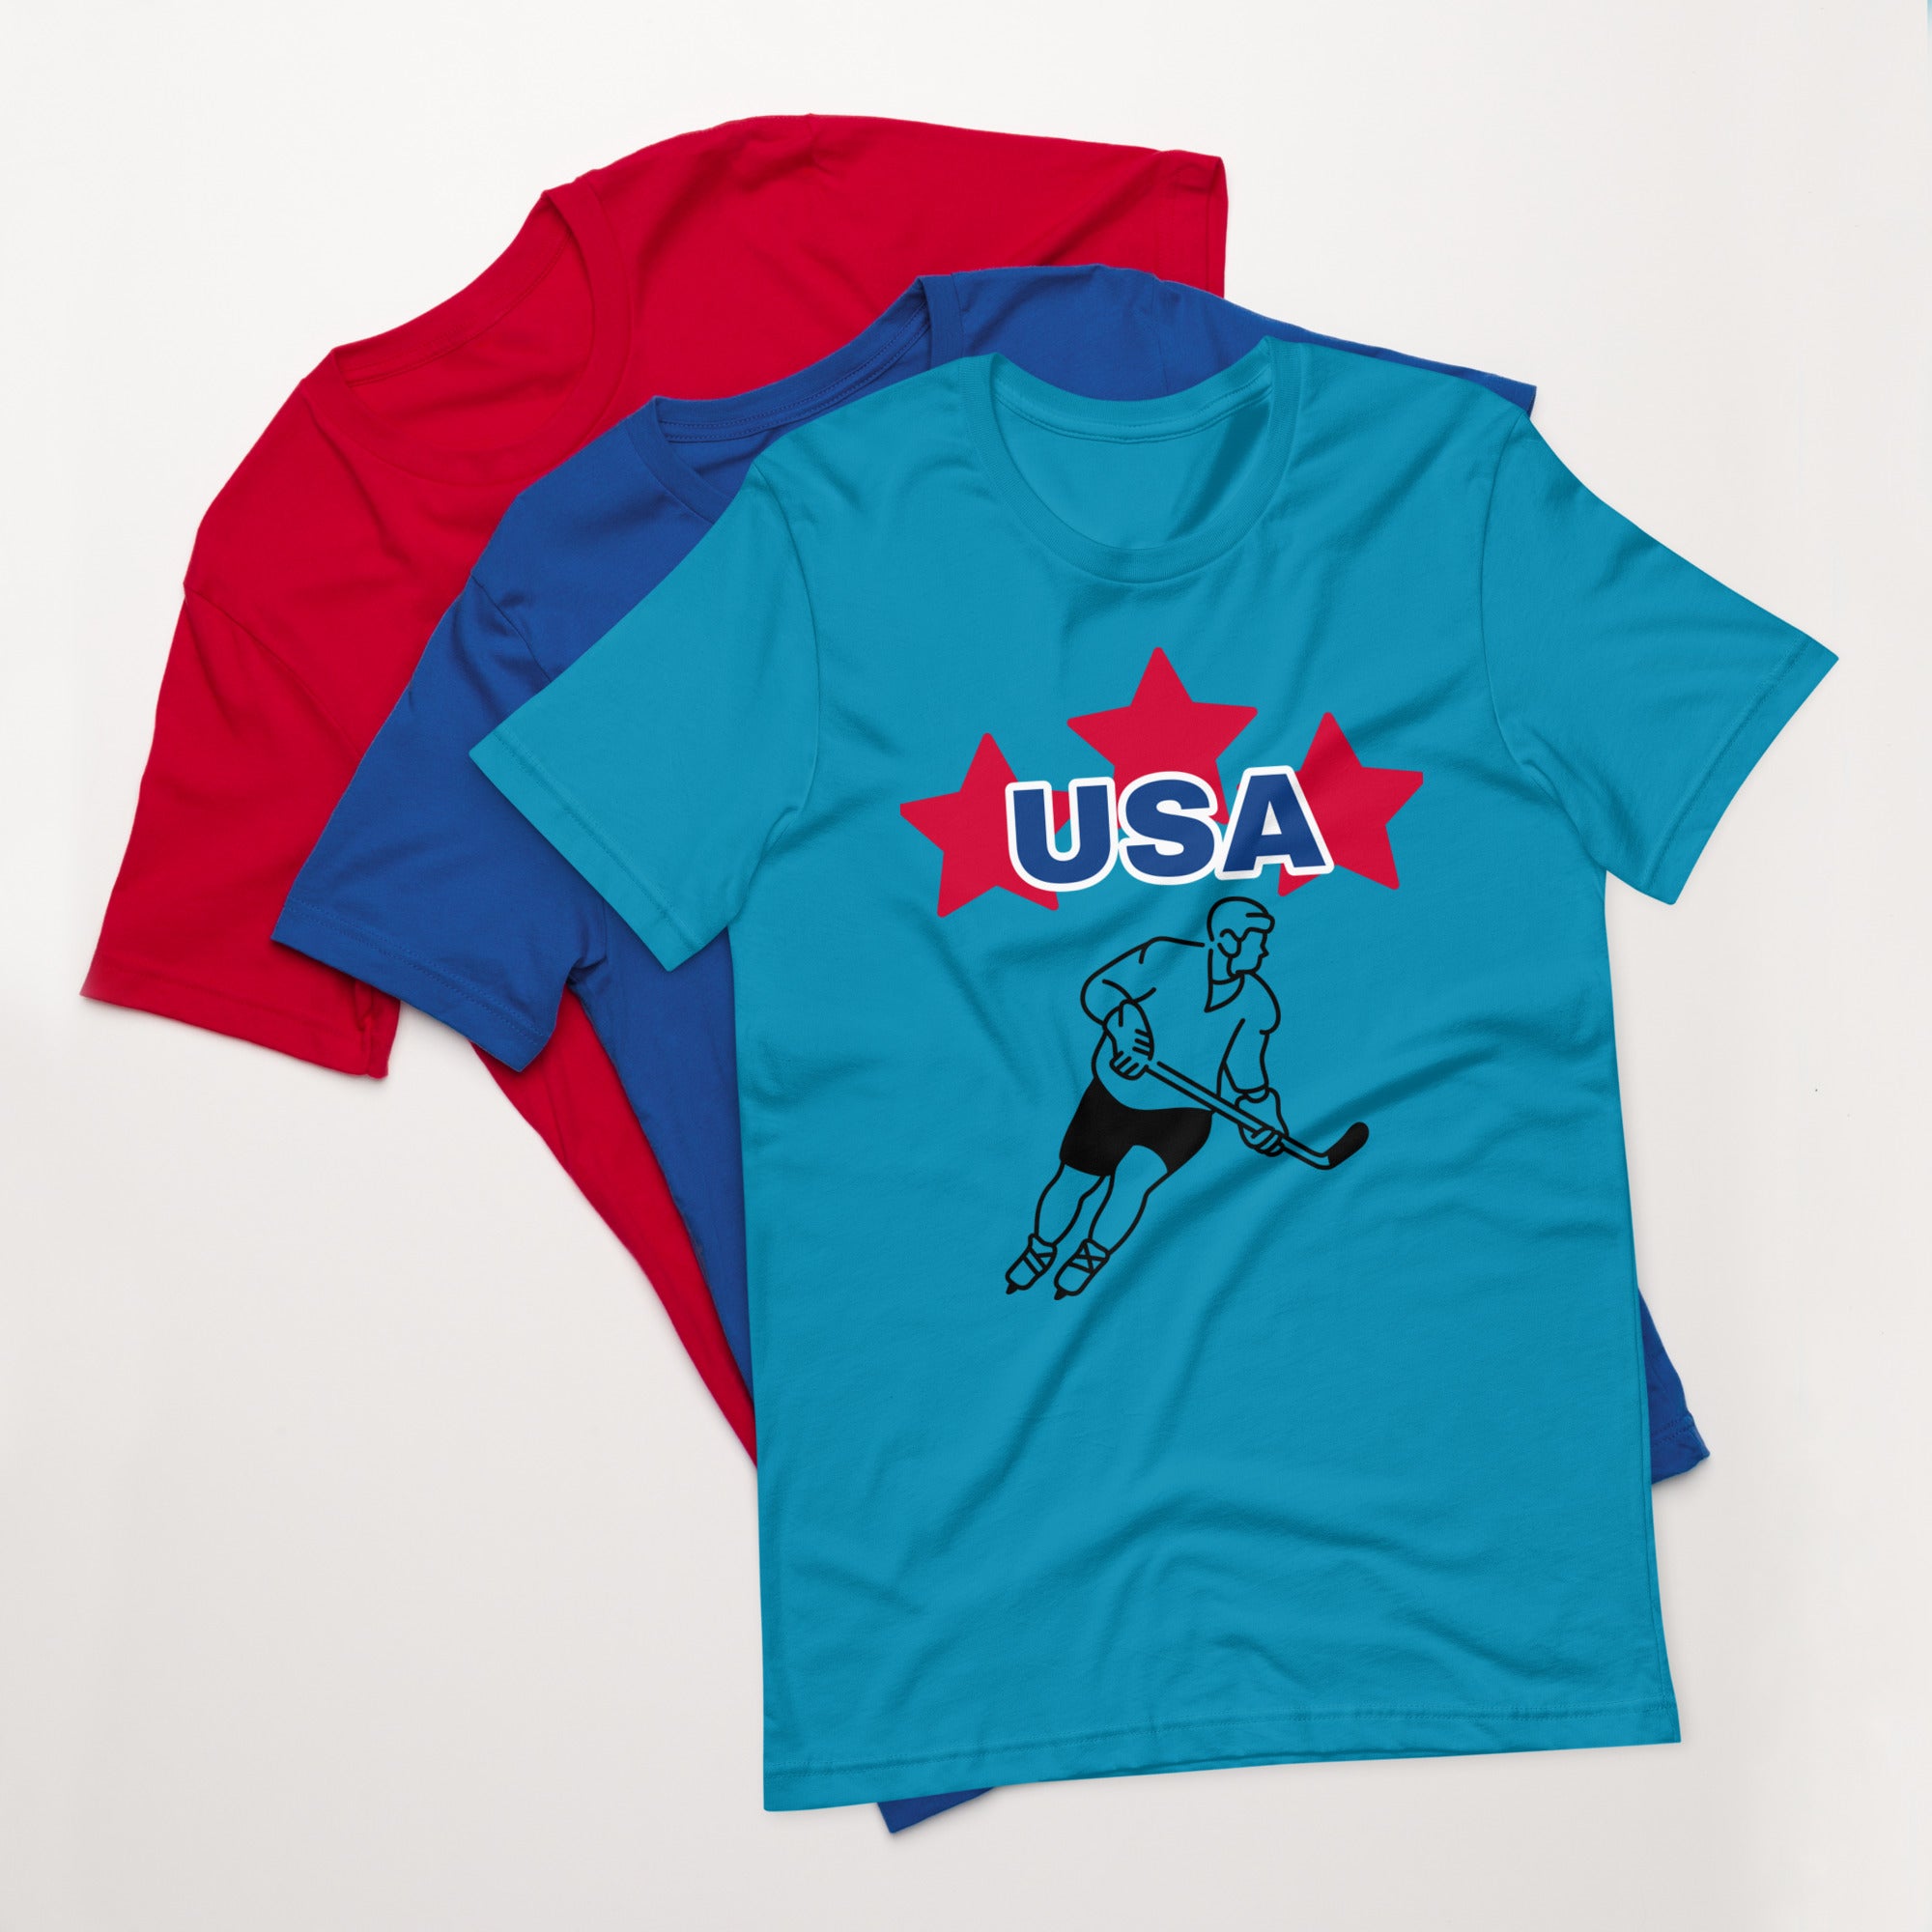 USA - Unisex t-shirt